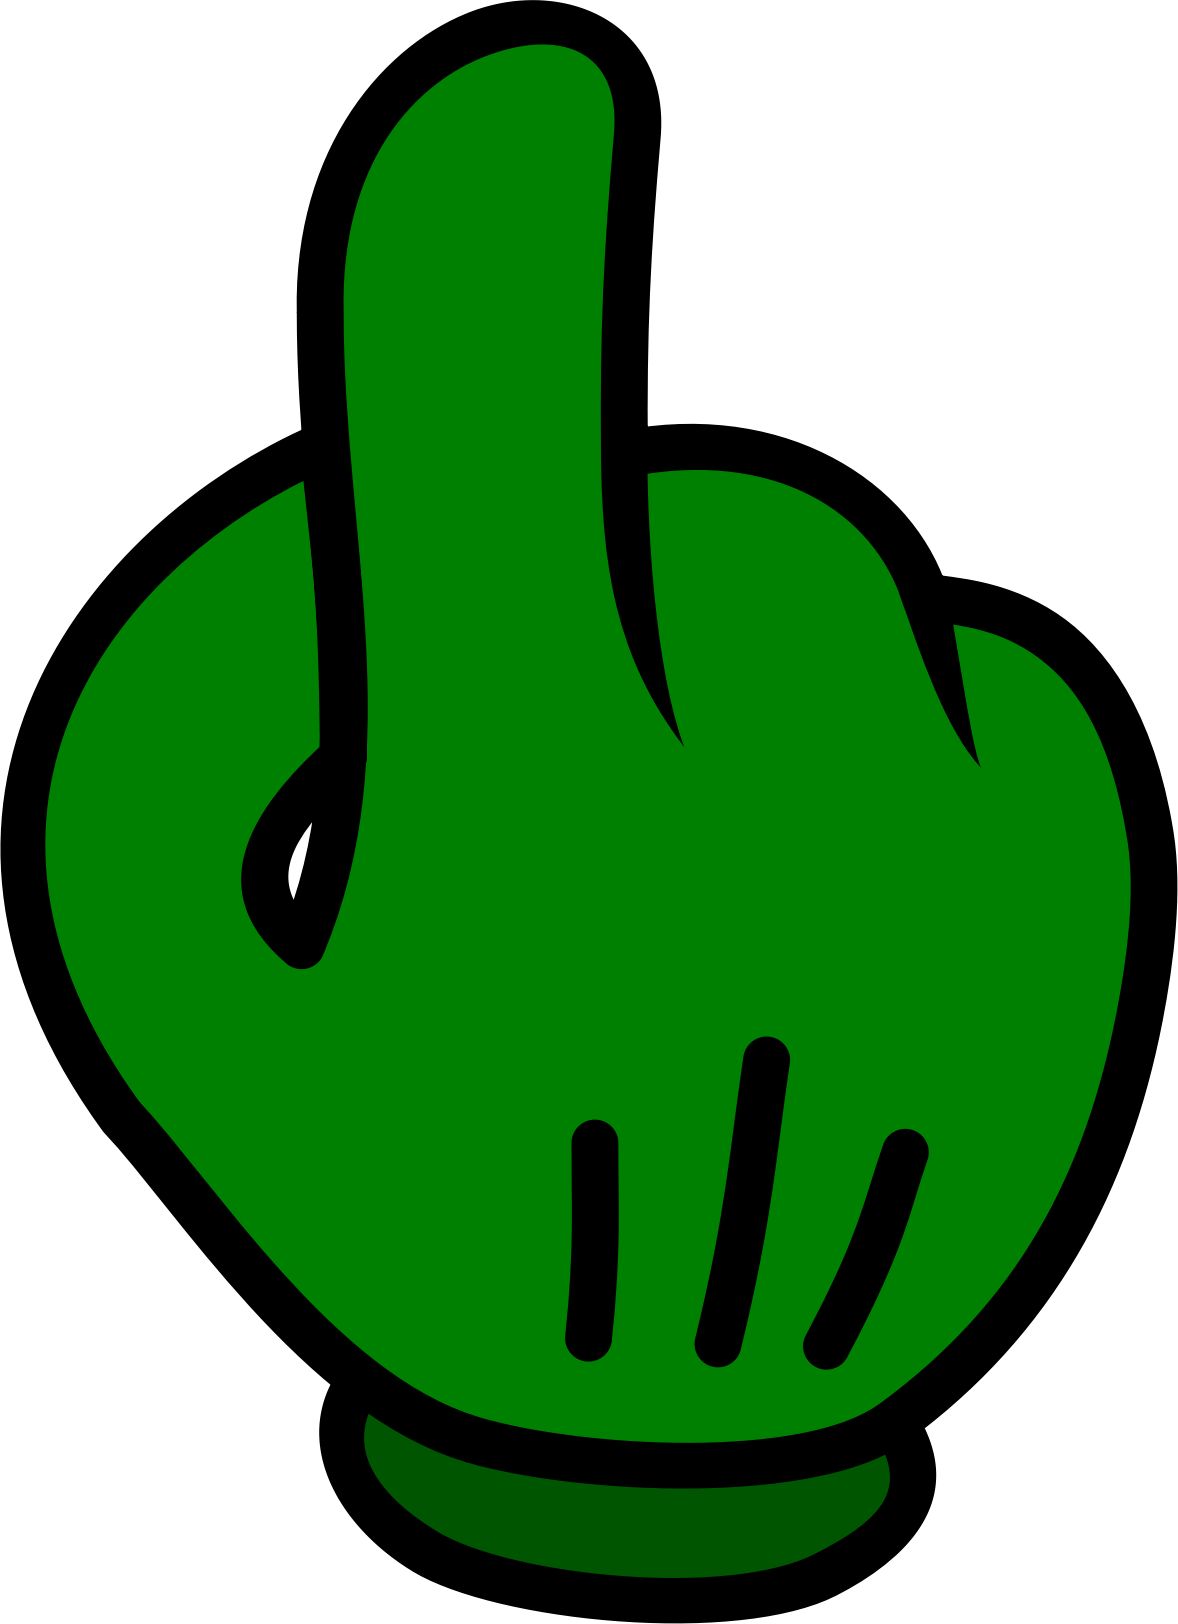 Finger poke big image. Clipart gun green